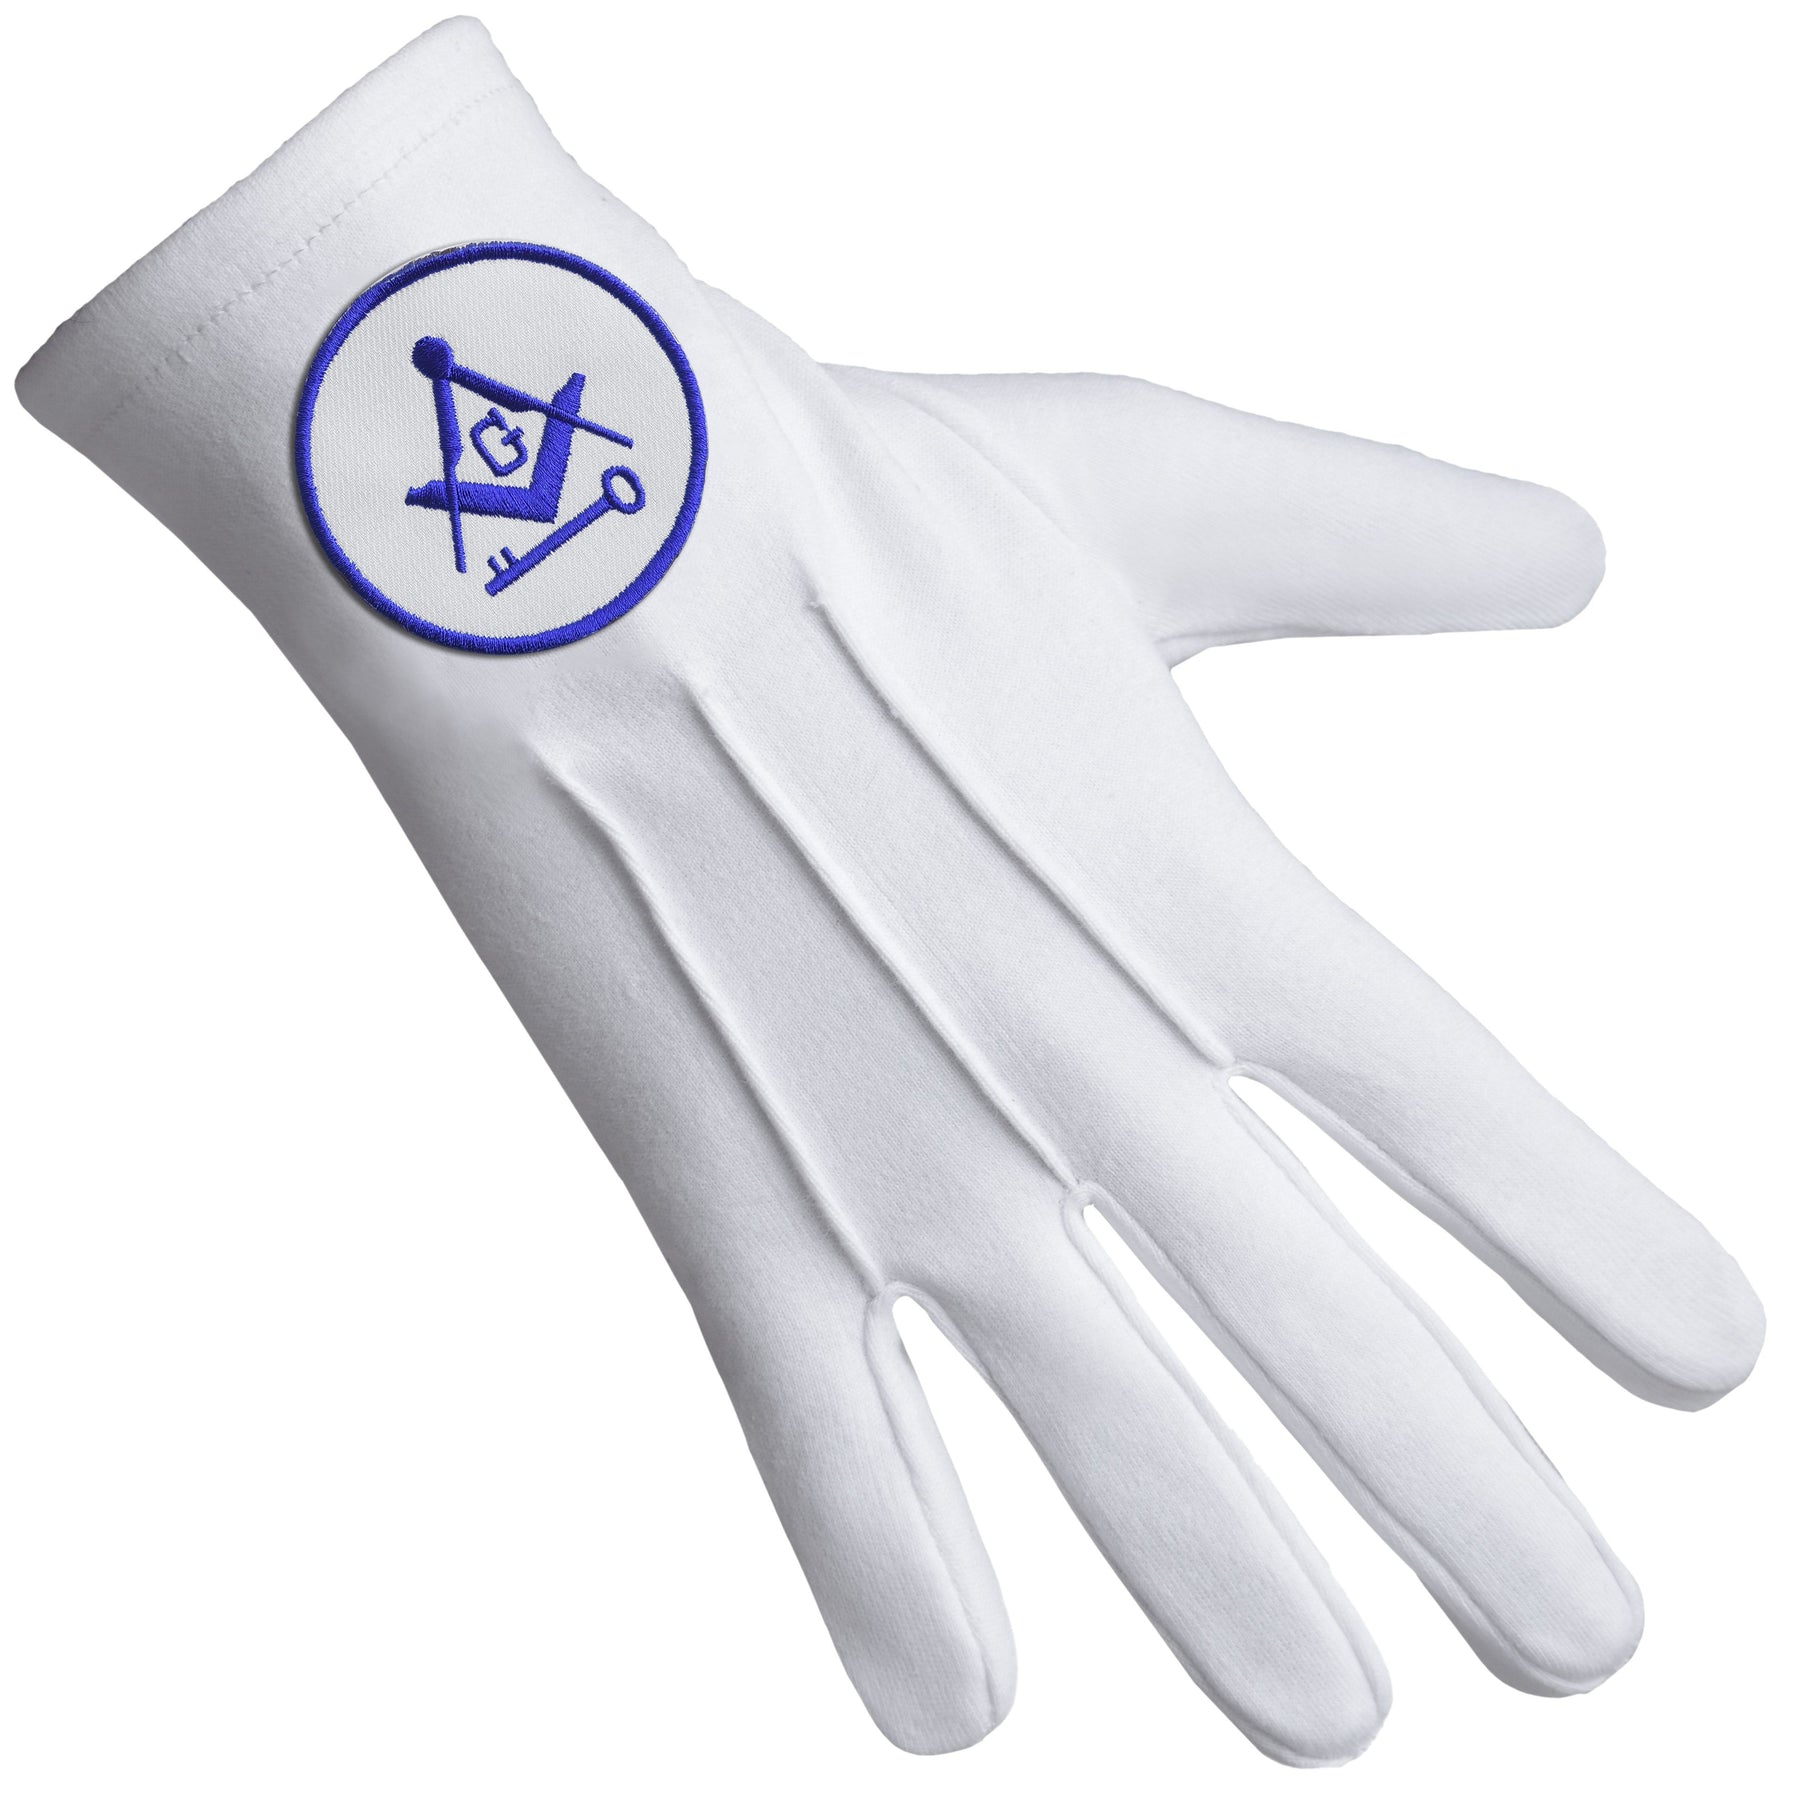 International Masons Glove - Cotton With Square And Compass G & Key - Bricks Masons